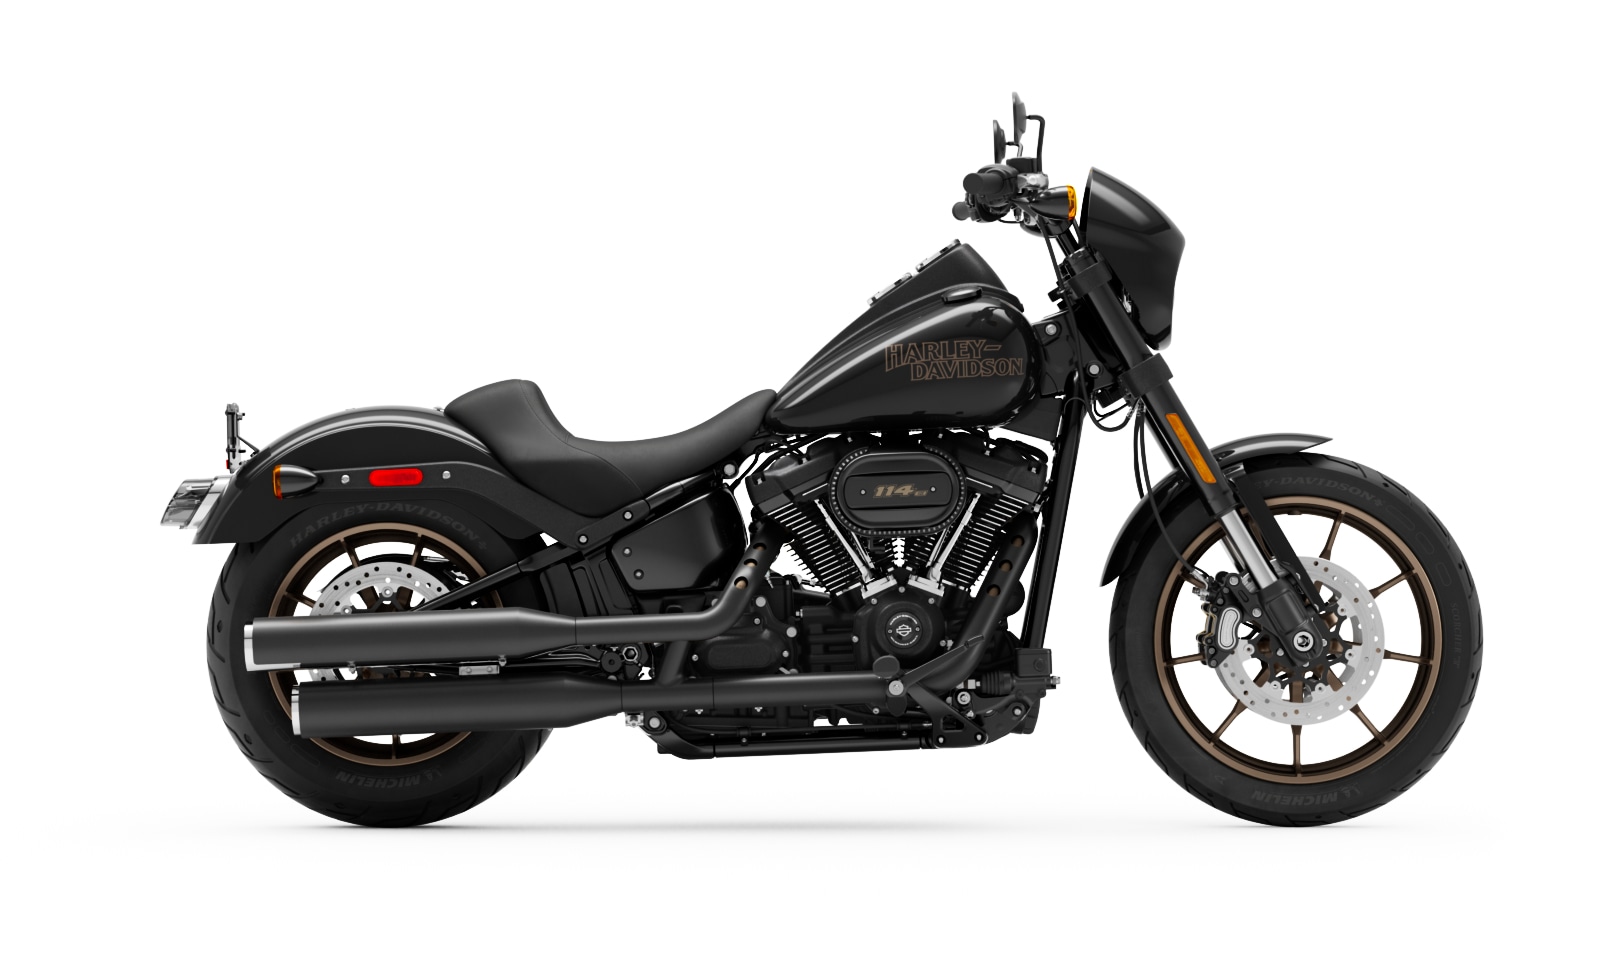 Harley Davidson Softail Low Rider S 2020 New Motorcycle At Thunderbike